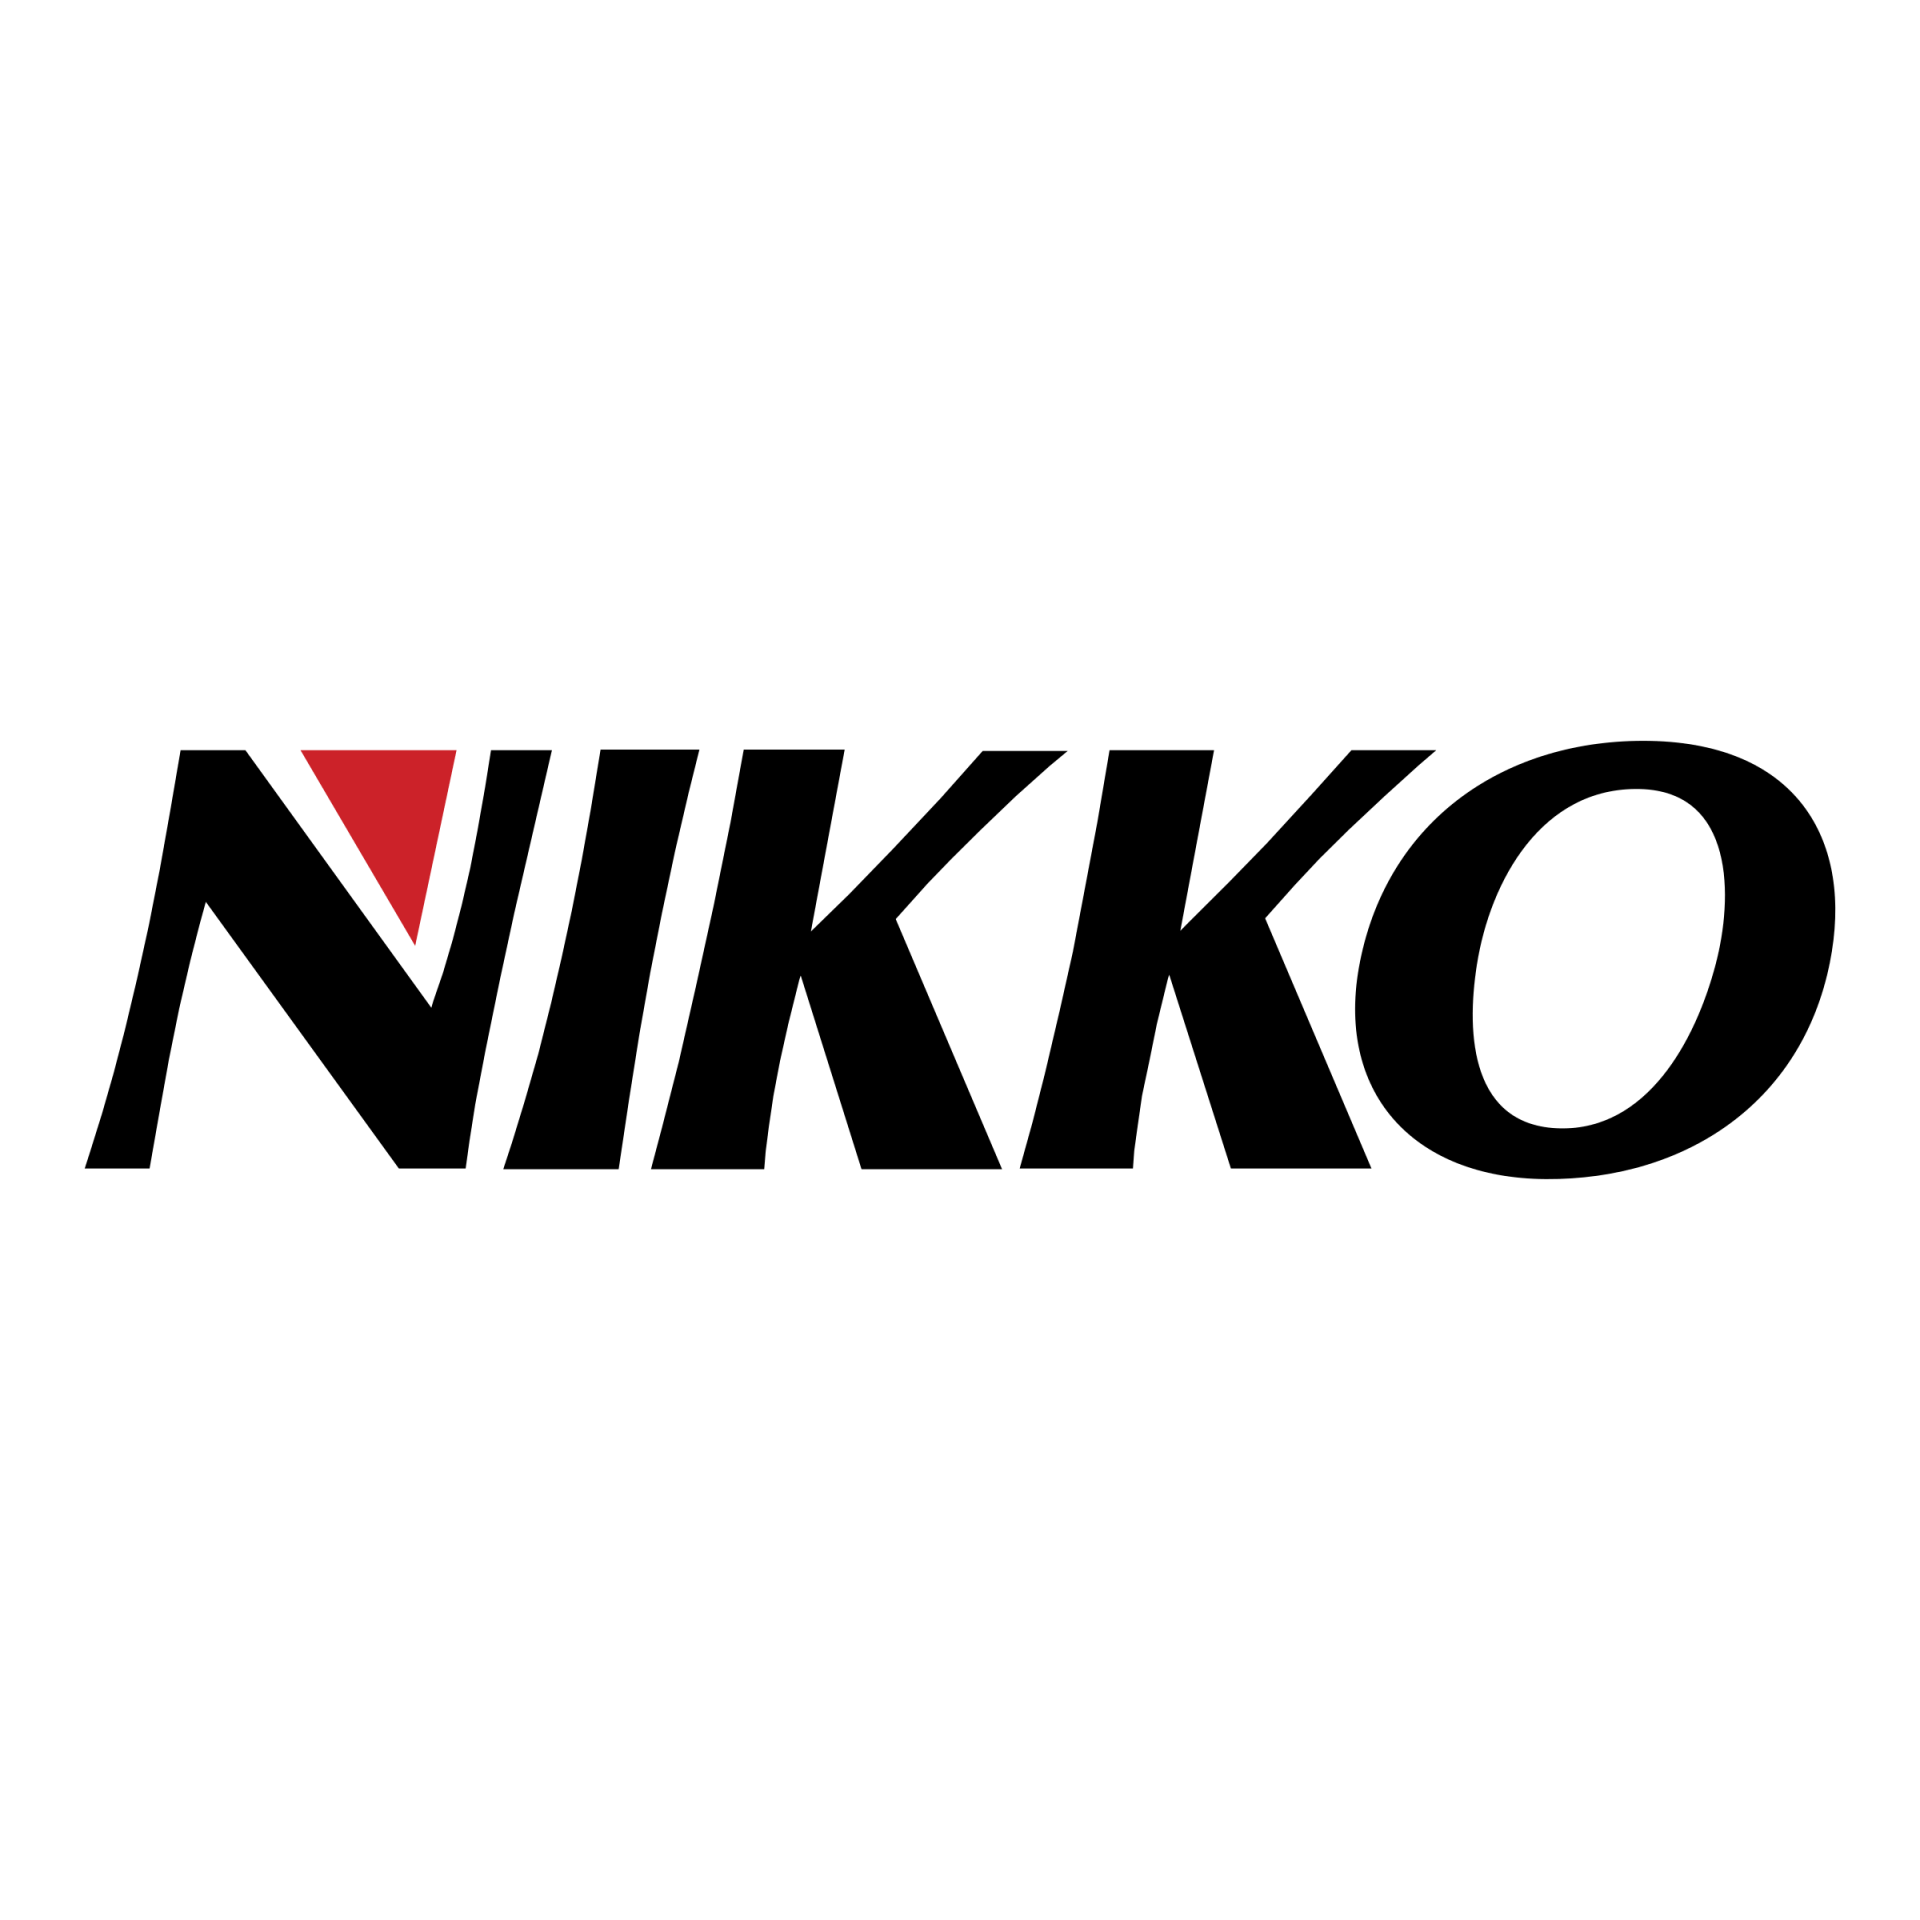 nikko-1-logo-png-transparent-3257357954.png